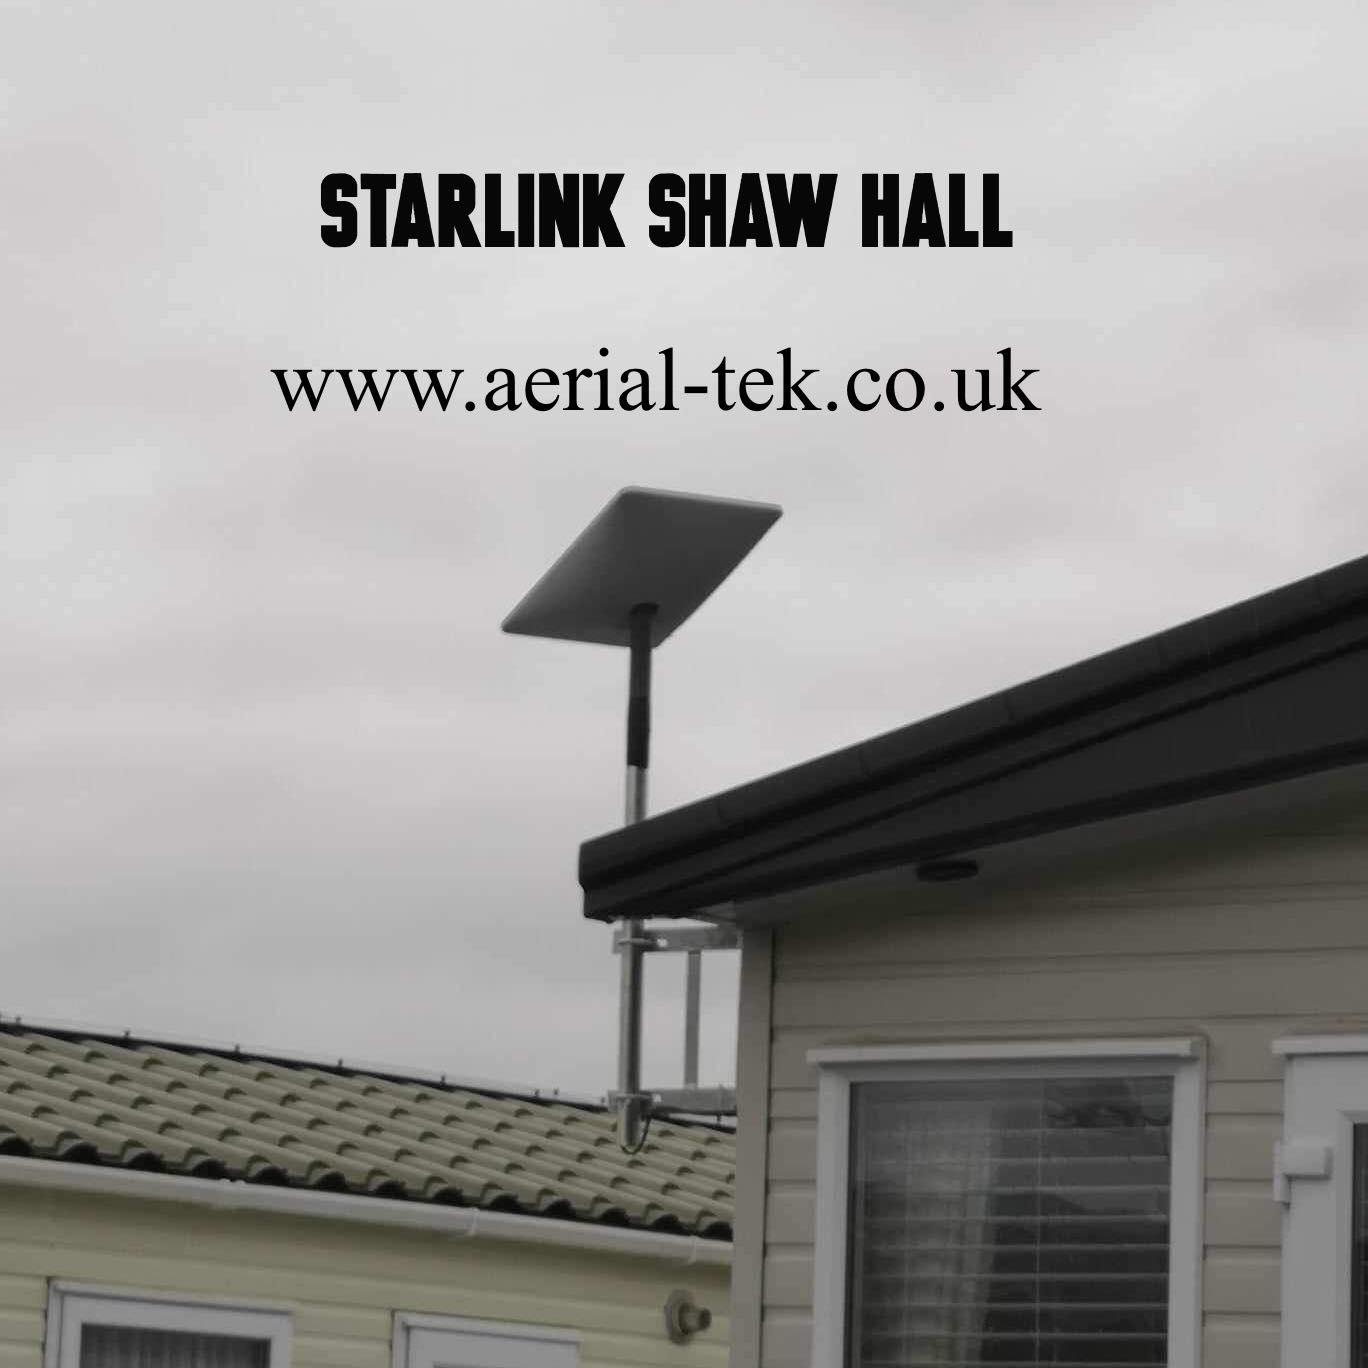 Starlink Shaw Hall Caravan Park